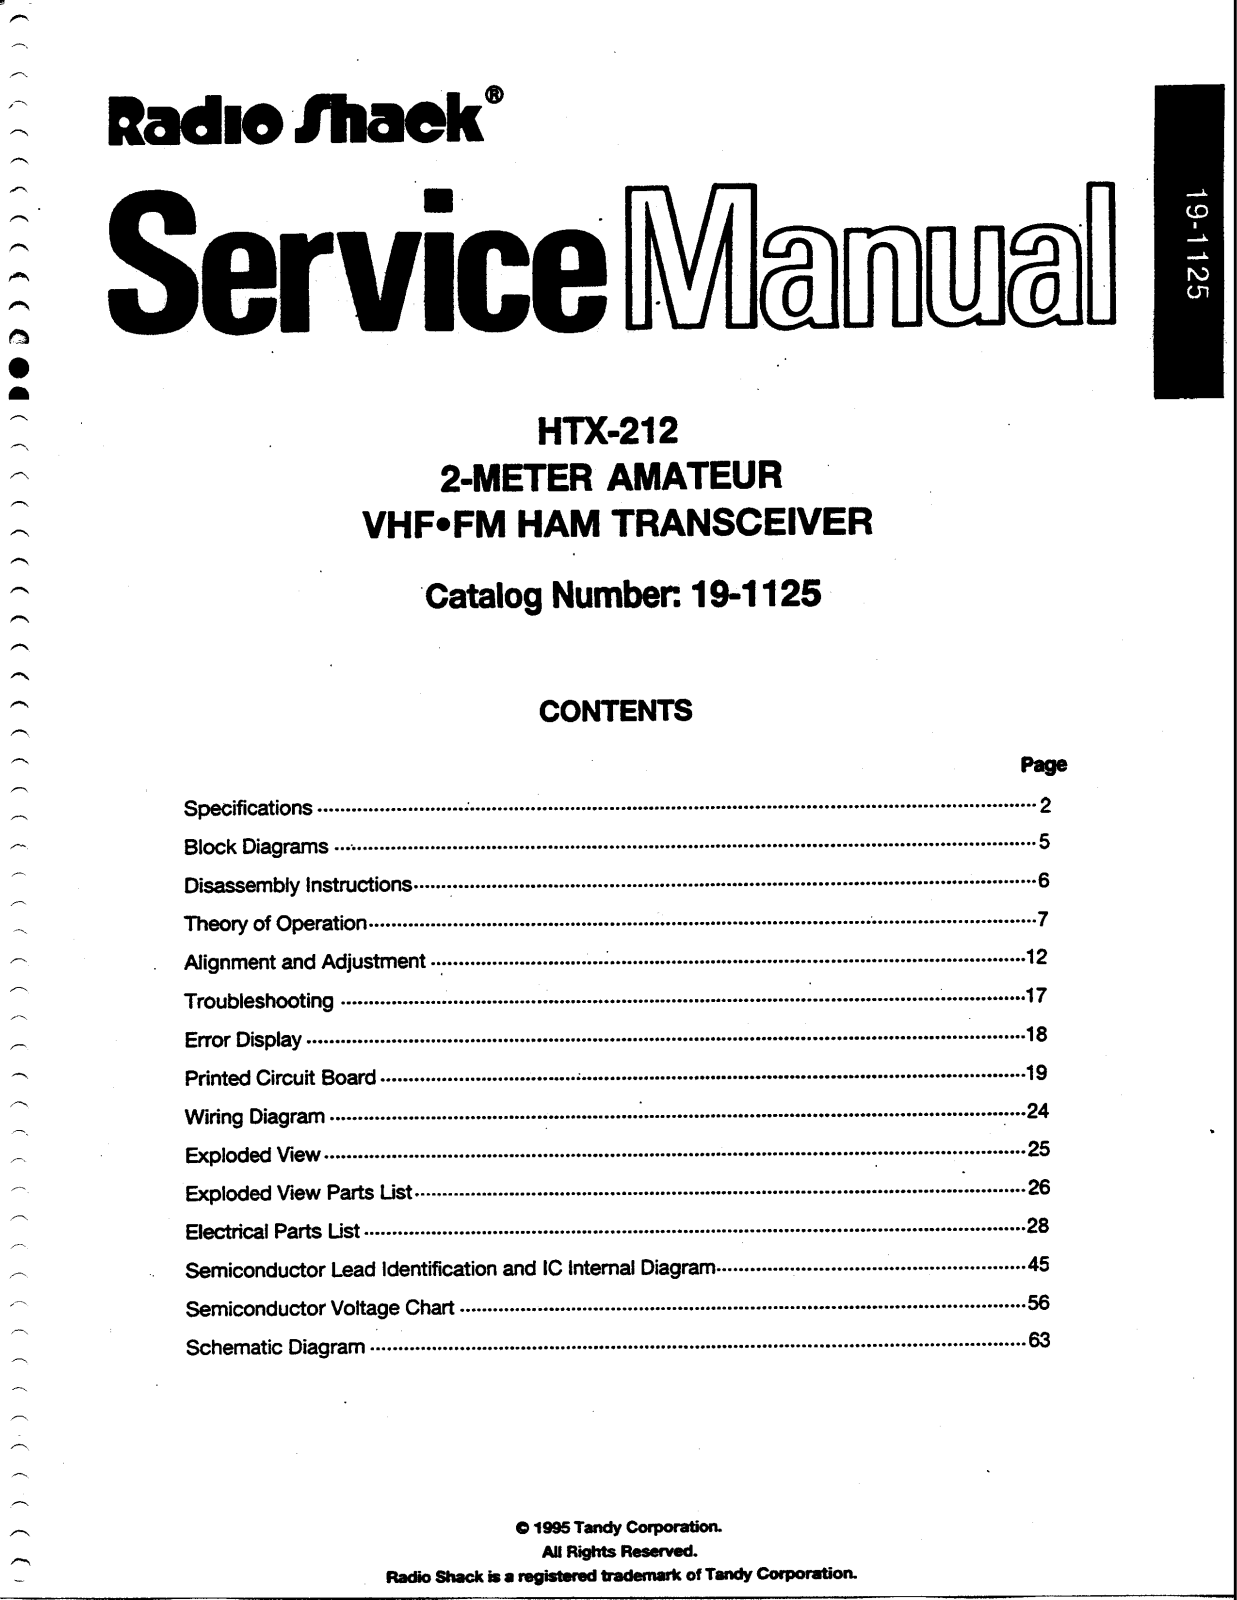 RadioShack HTX-212 Service Manual